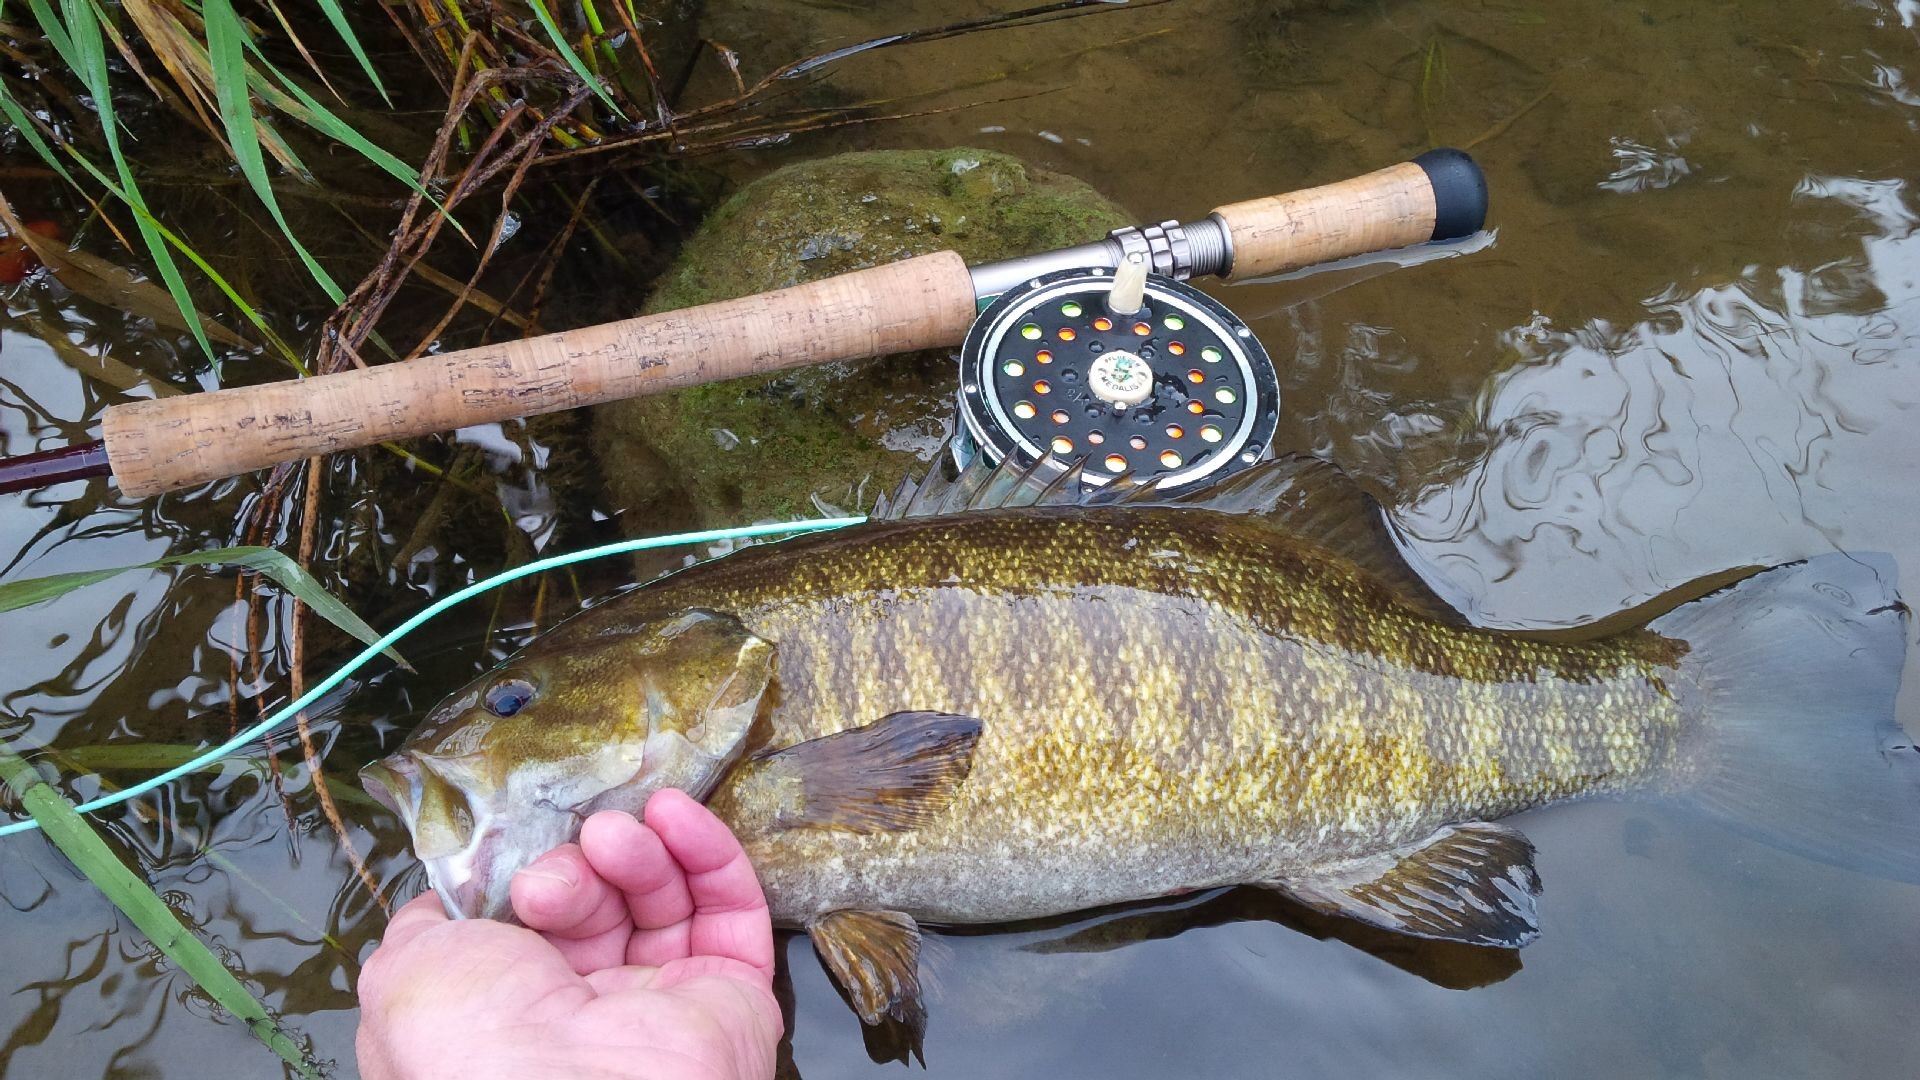 1920x1080 Alec Medemblik – Tying Flies for “River” Smallmouth Bass